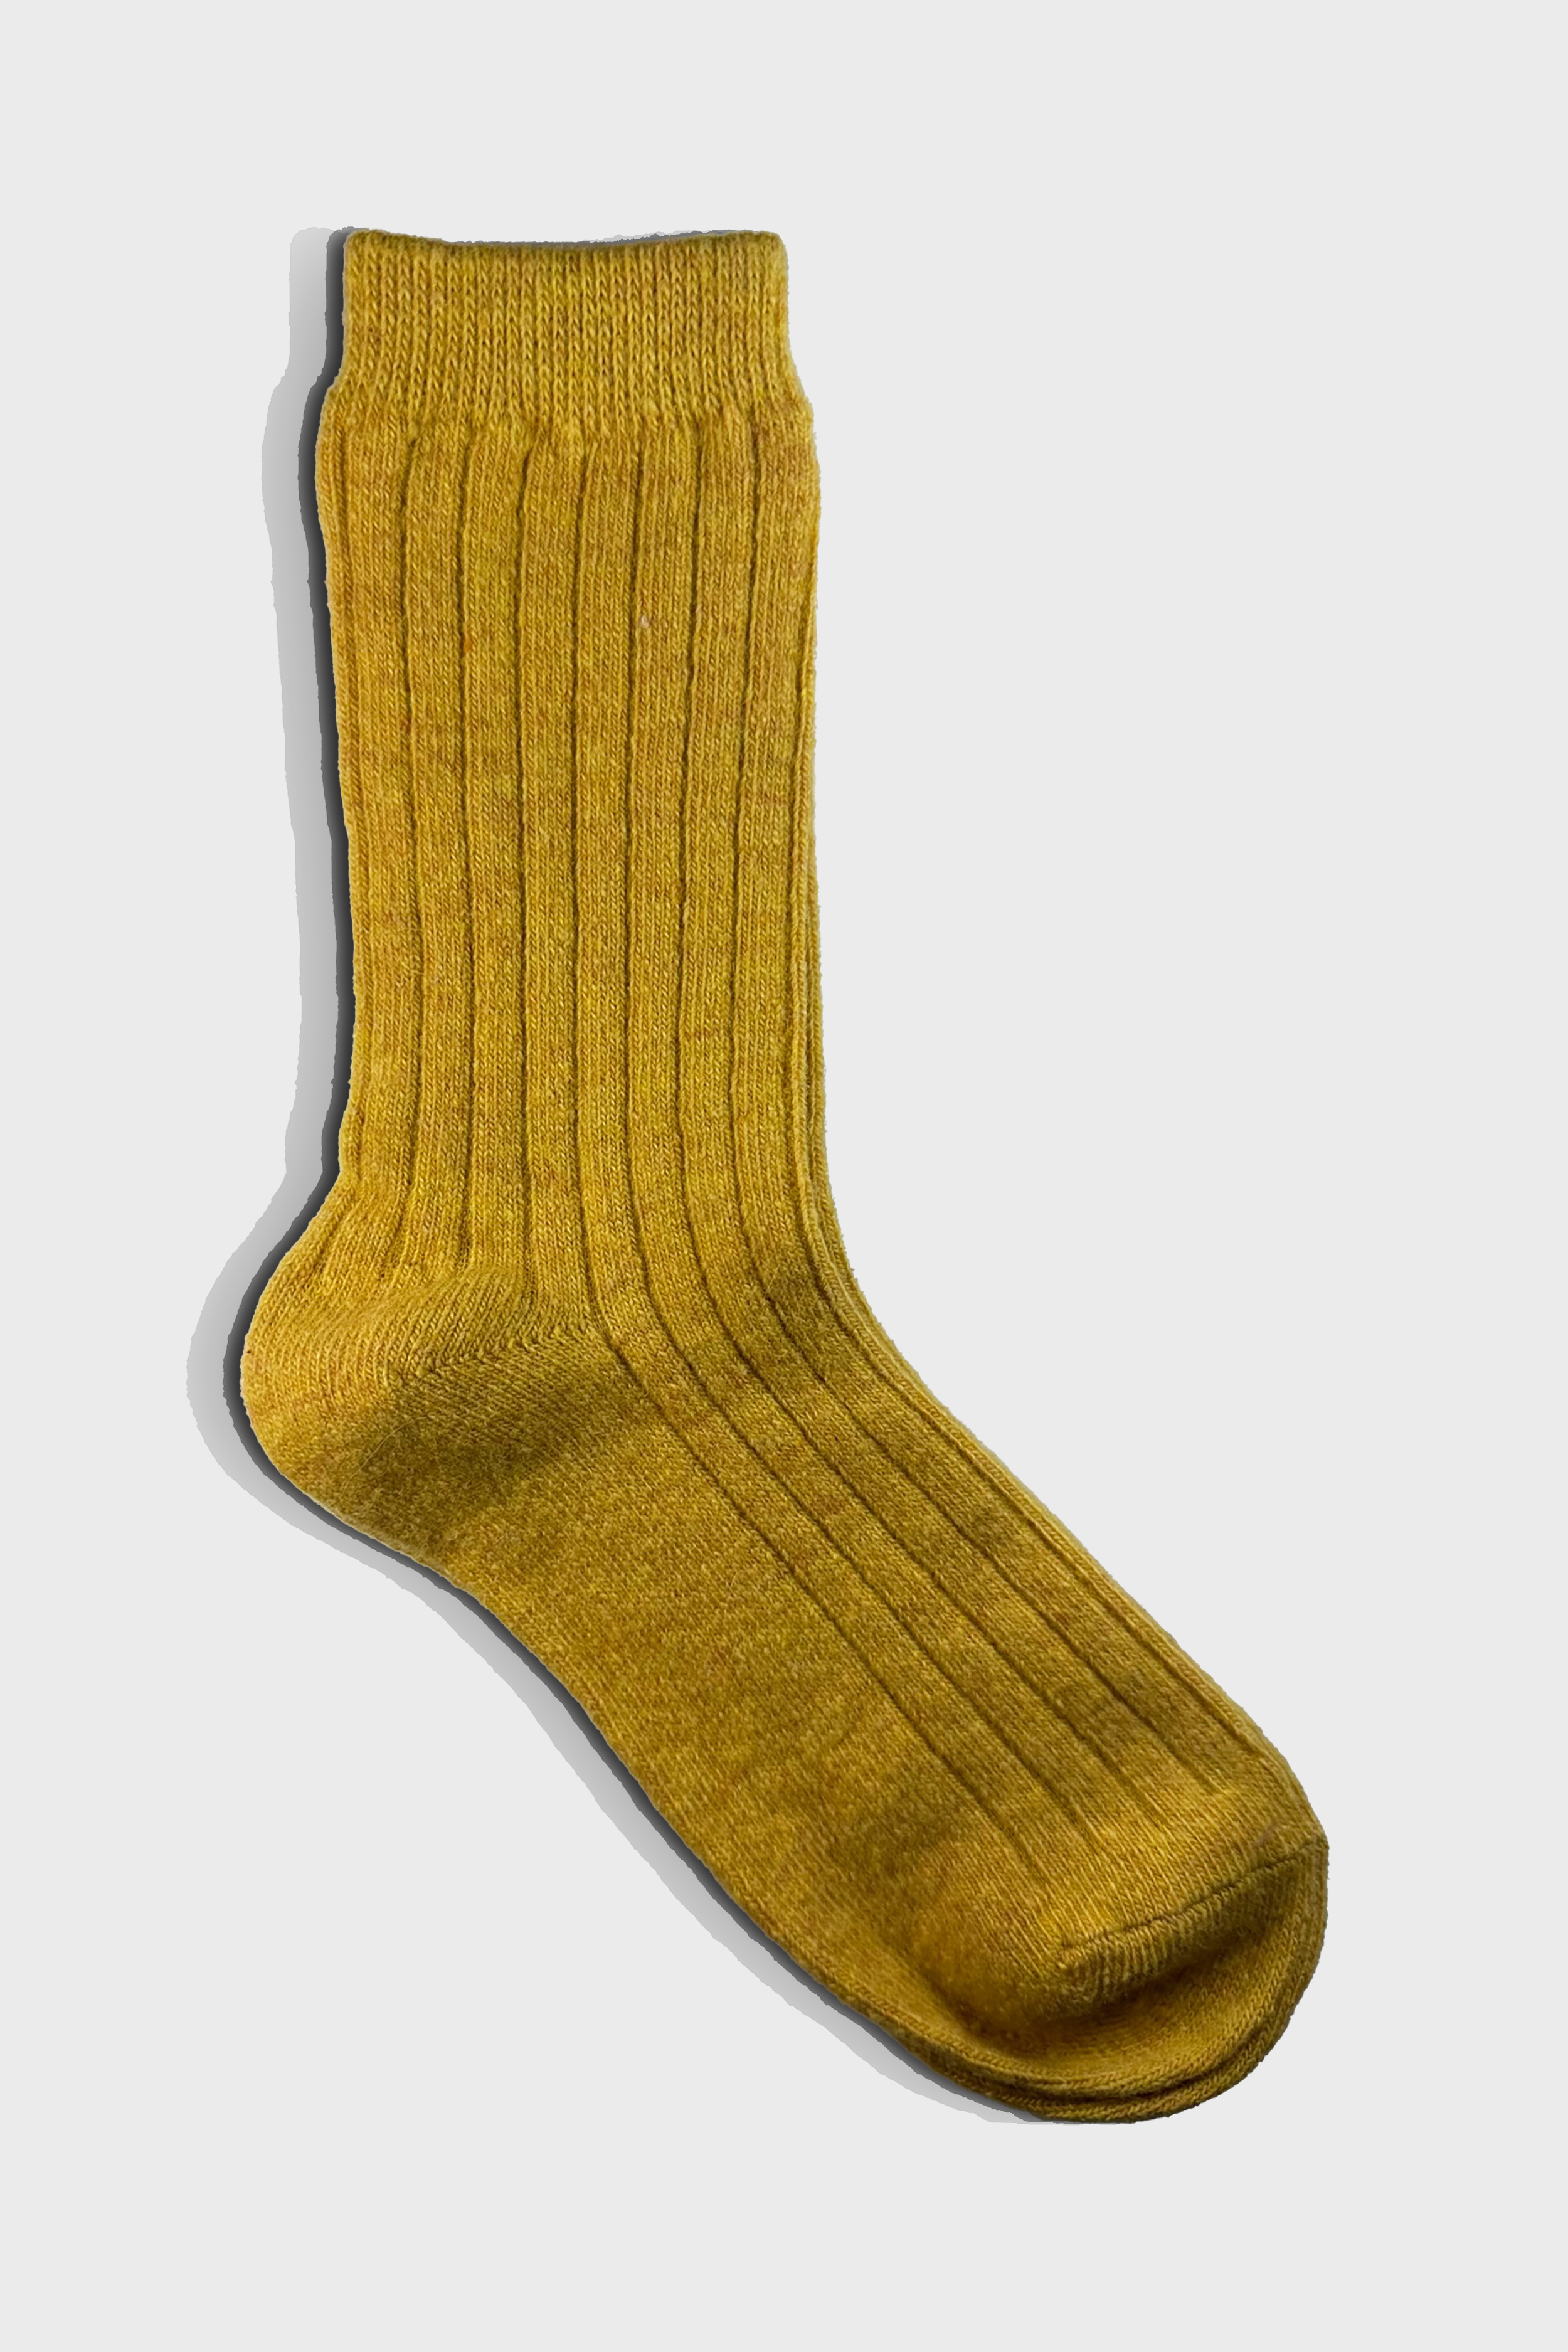 Essential Boot Sock